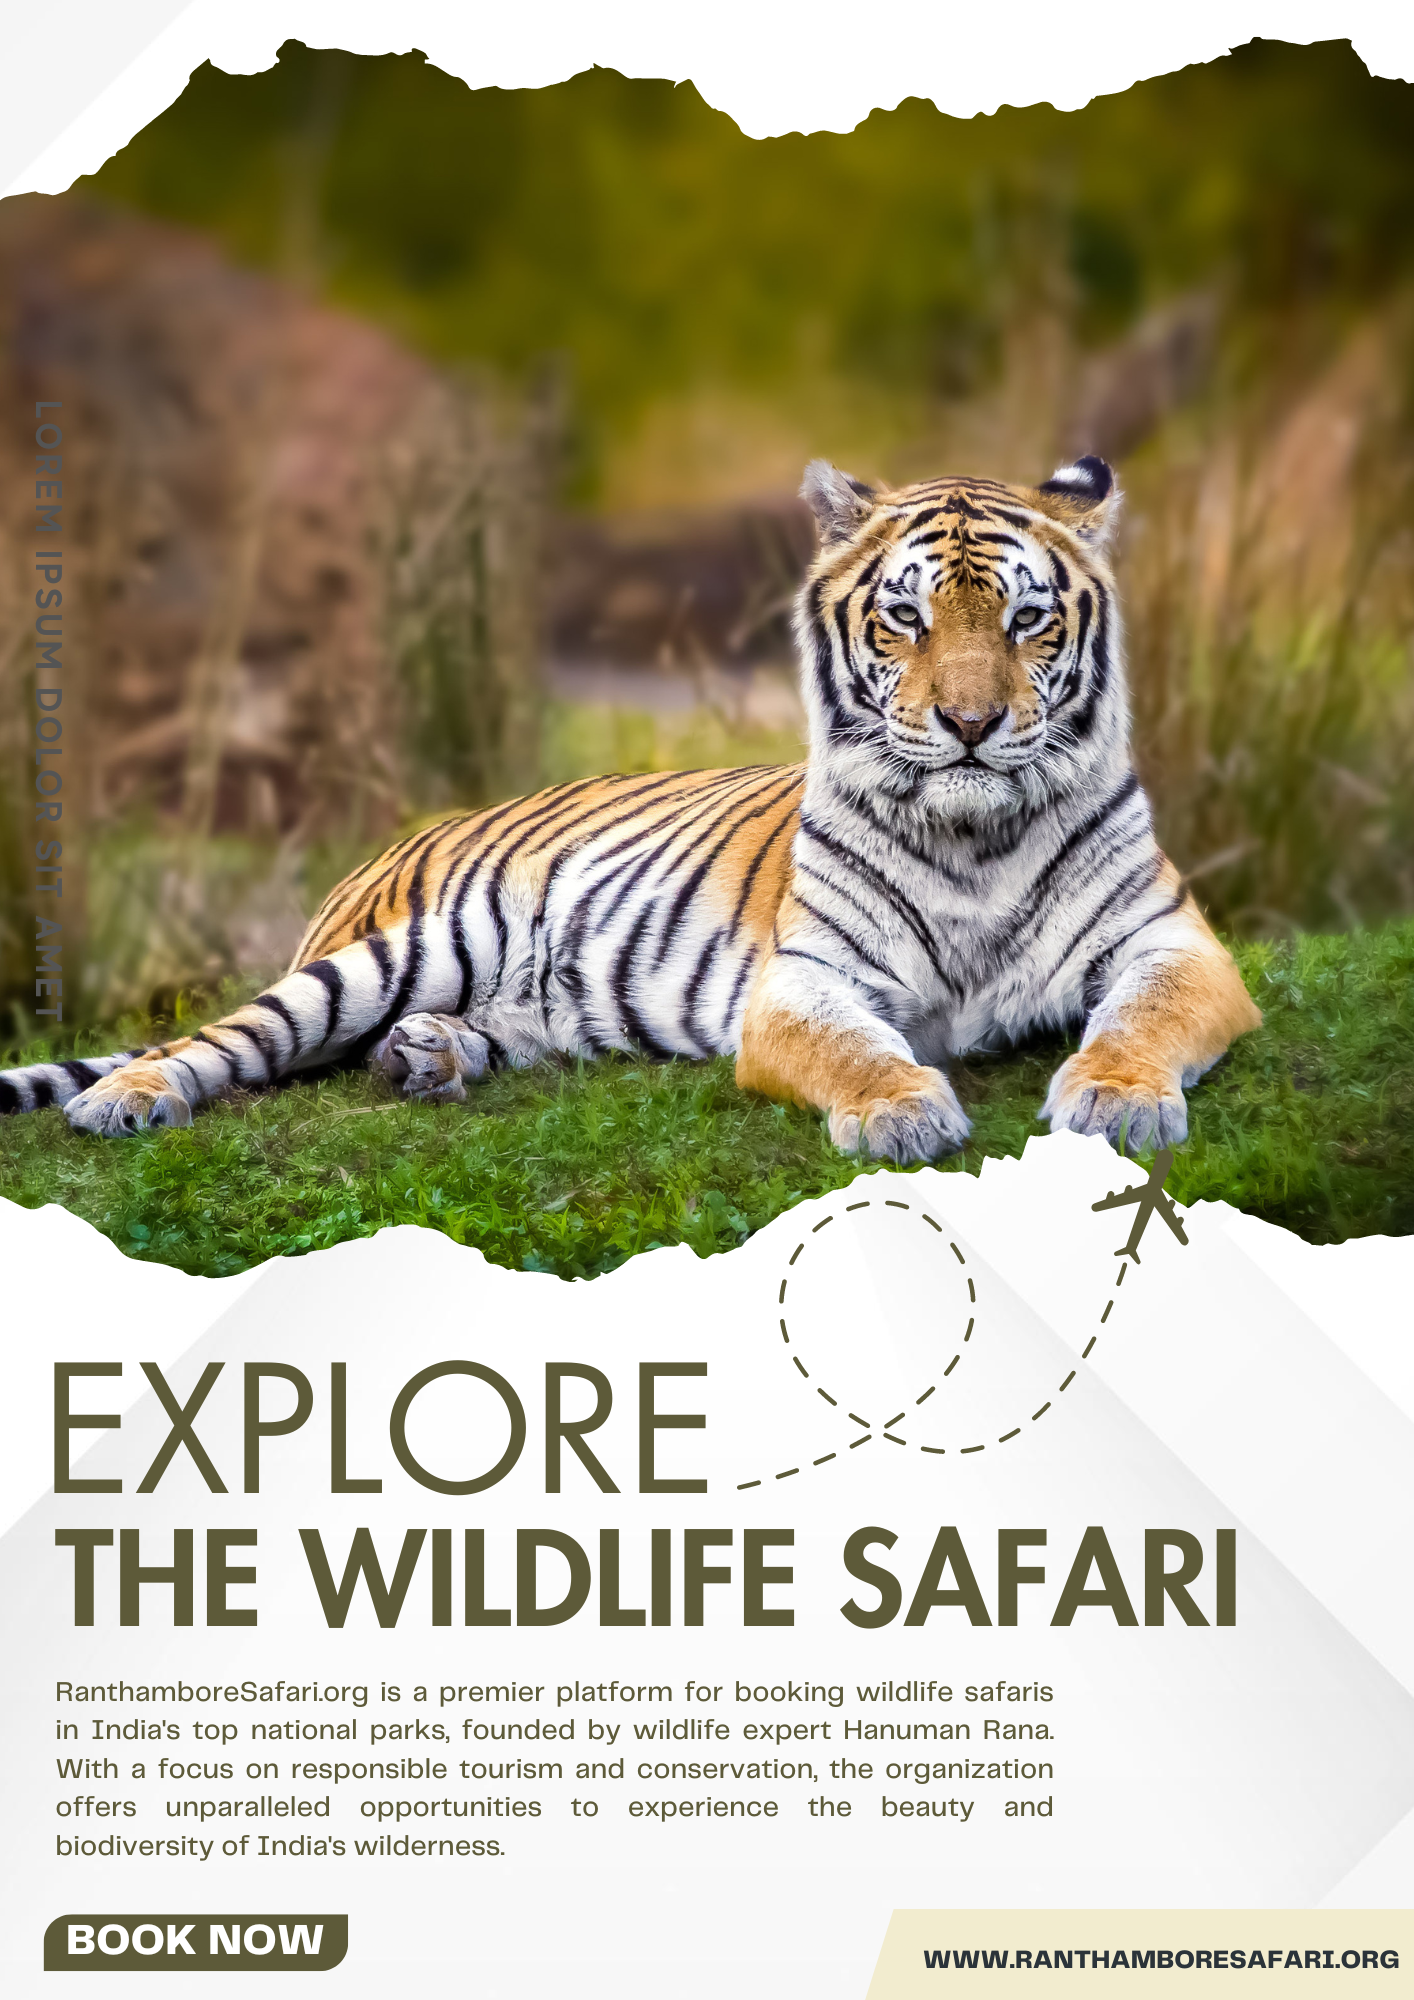 Wildlife Safari Booking With RanthamboreSafariorg